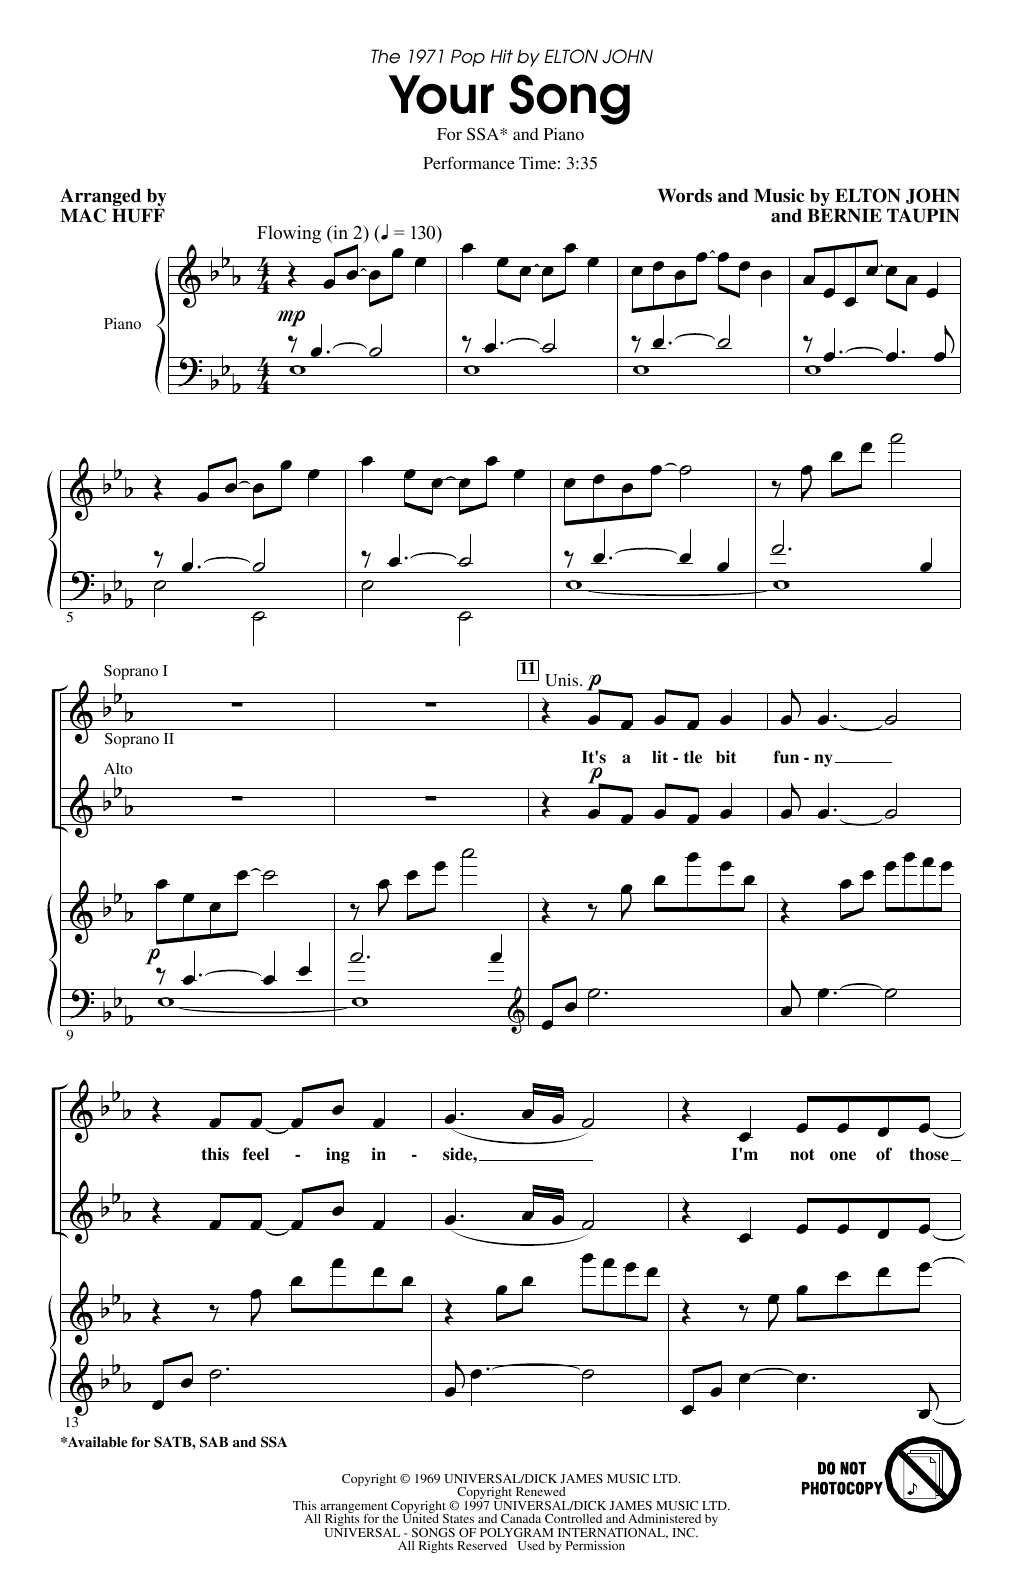 Elton John Your Song (arr. Mac Huff) Sheet Music Notes & Chords for SAB Choir - Download or Print PDF